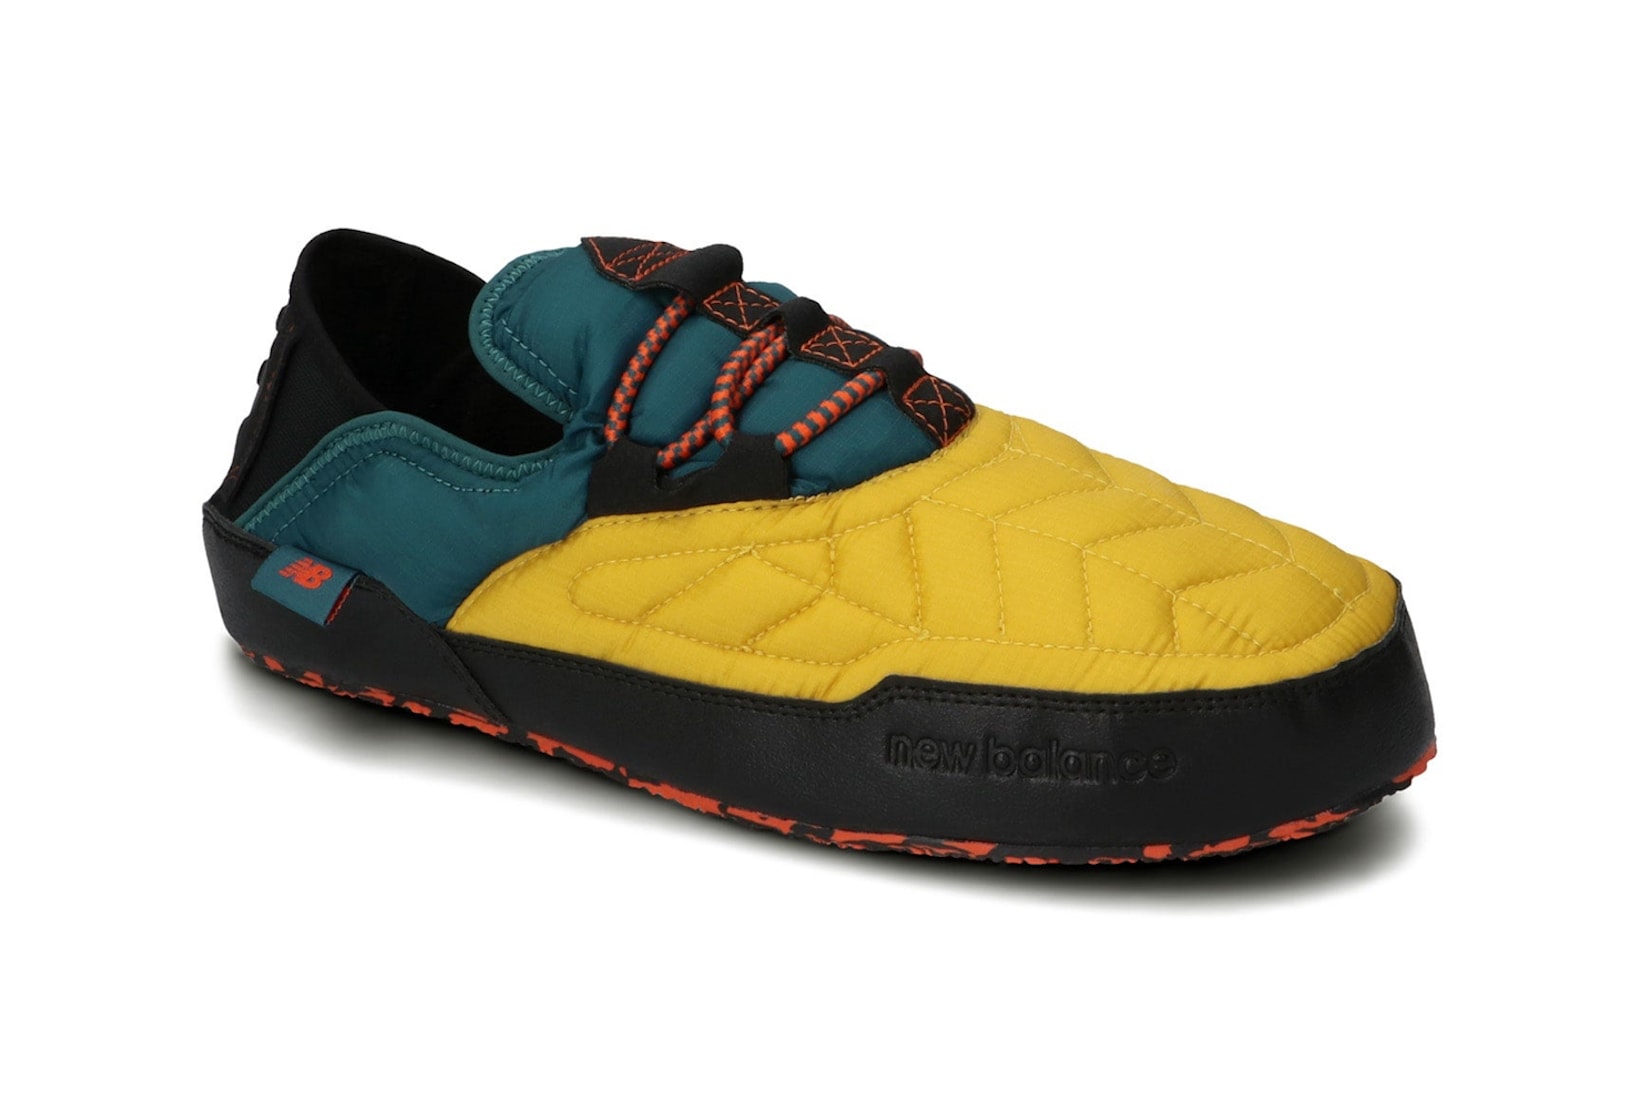 New Balance Caravan Moc Low Slip-Ons Slippers Yellow Green Black Footwear Shoes